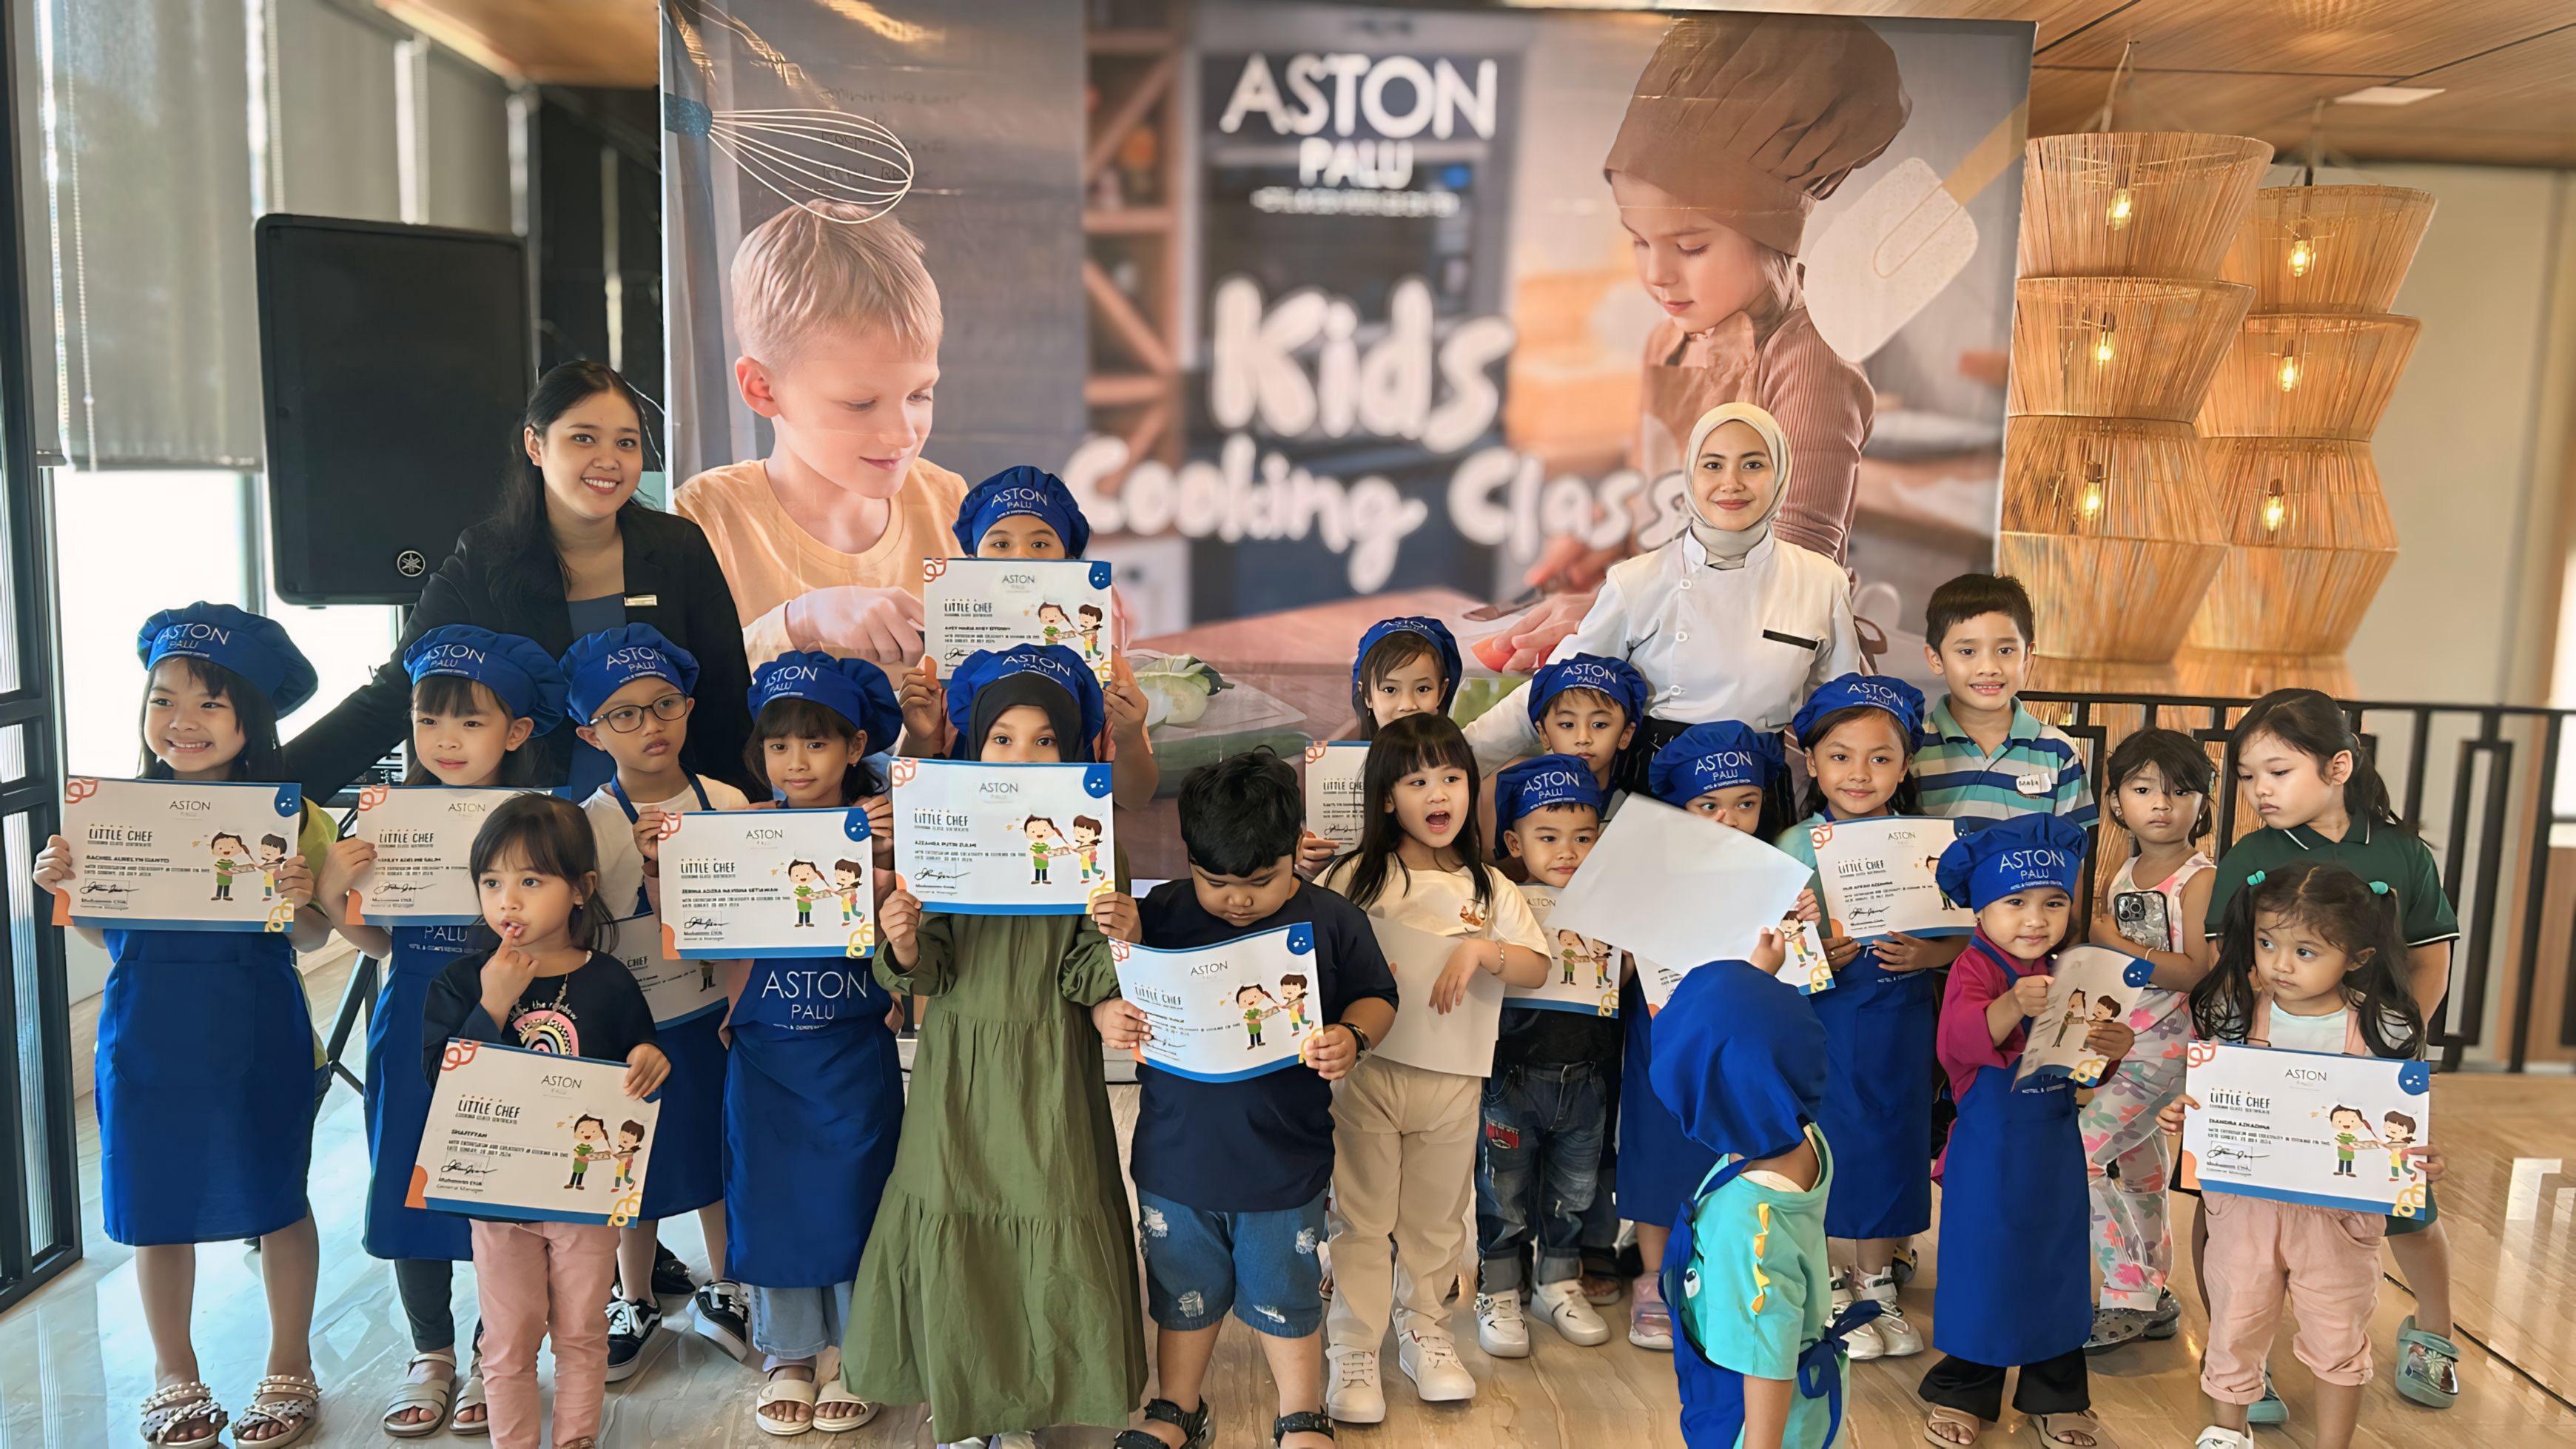 Serunya Kids Cooking Class di Aston Palu, Puluhan Anak Diajarkan Menghias Pizza Sesuai Kreasi